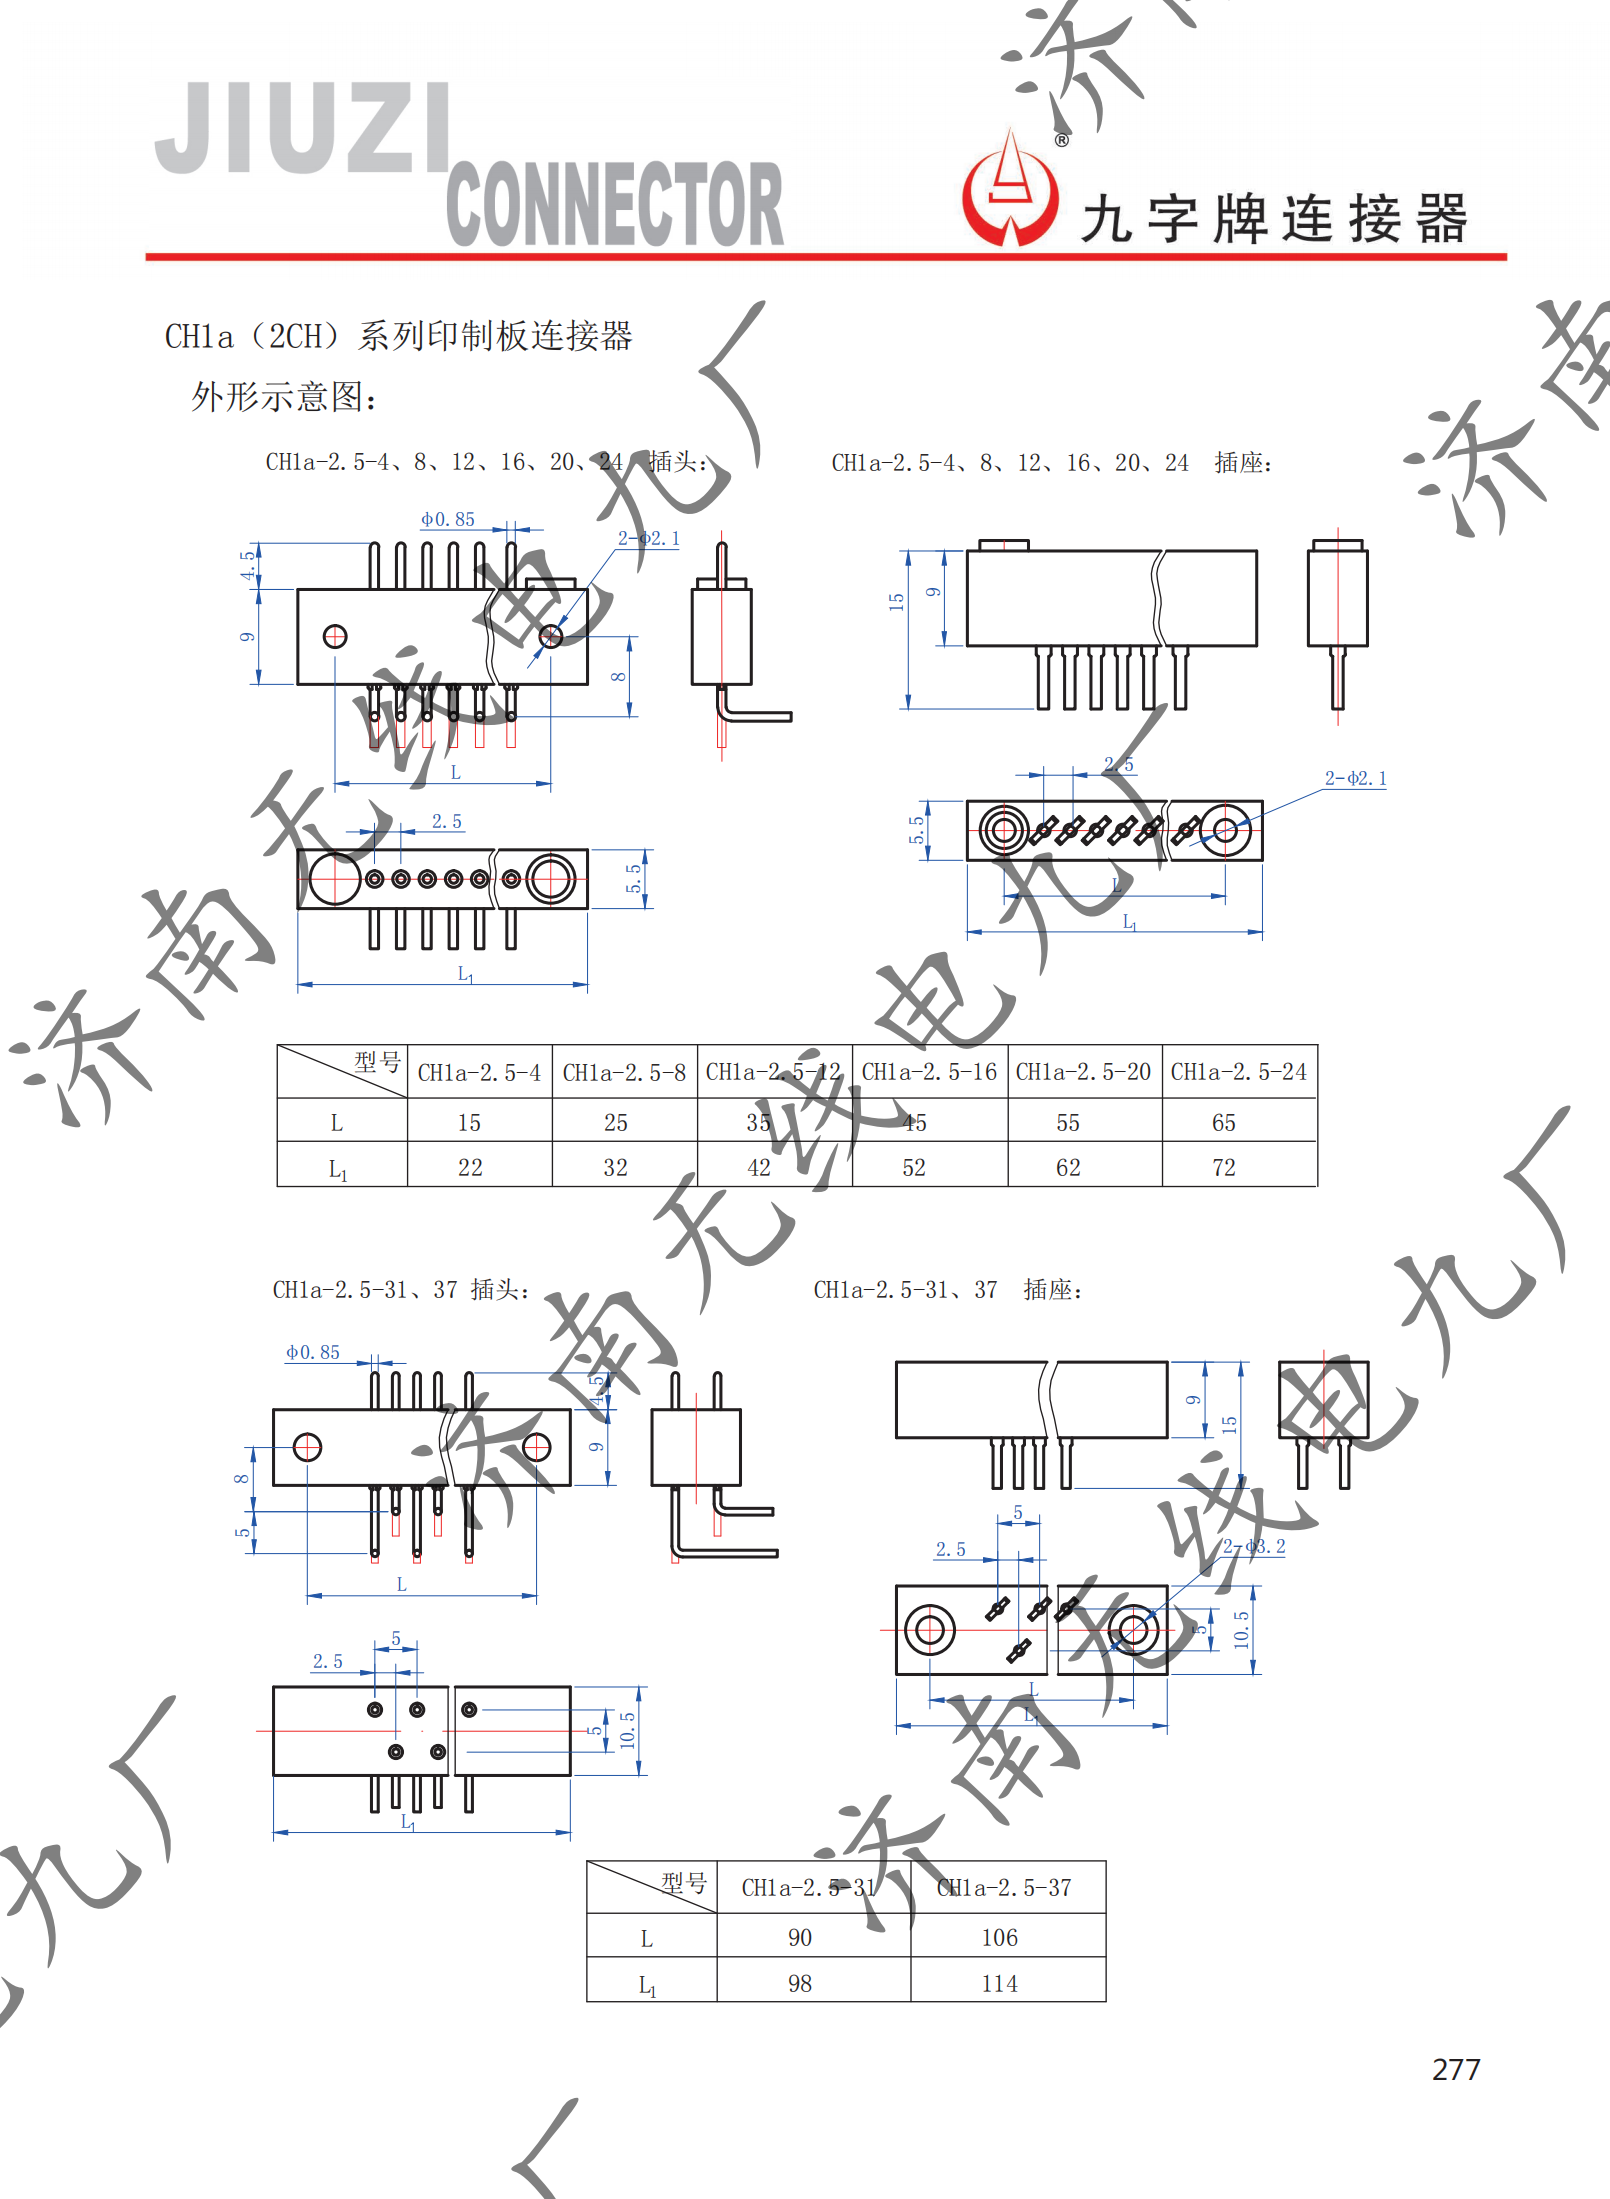 CH1a系列印制板连接器_01.png